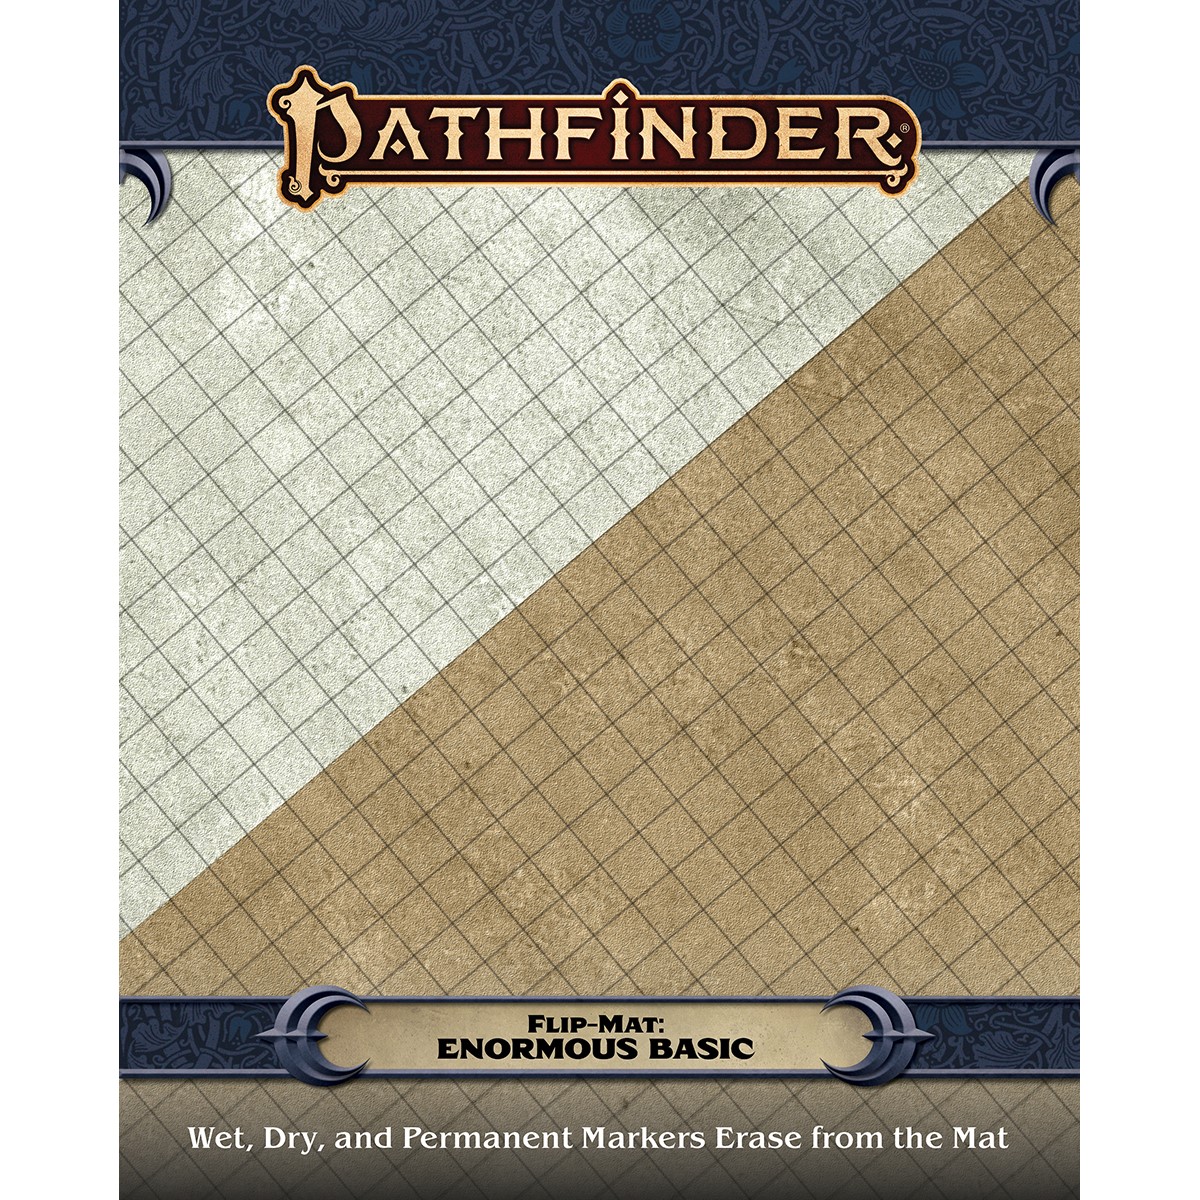 Pathfinder　Basic　Mat:　Enormous　Play　Accessories:　Let's　[::]　Flip　Games